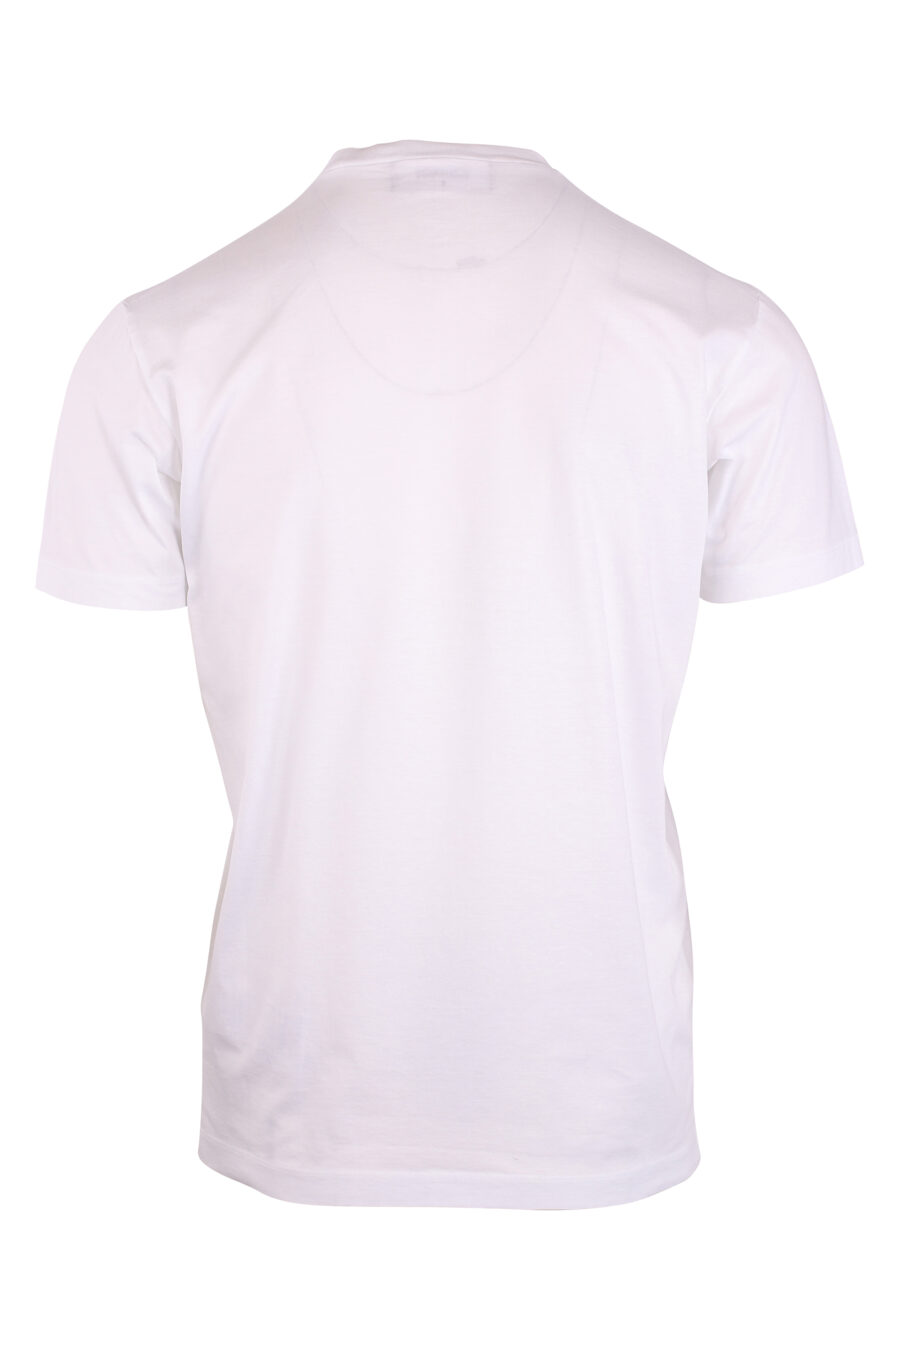 T-shirt blanc avec logo "icon surfer" - IMG 8886